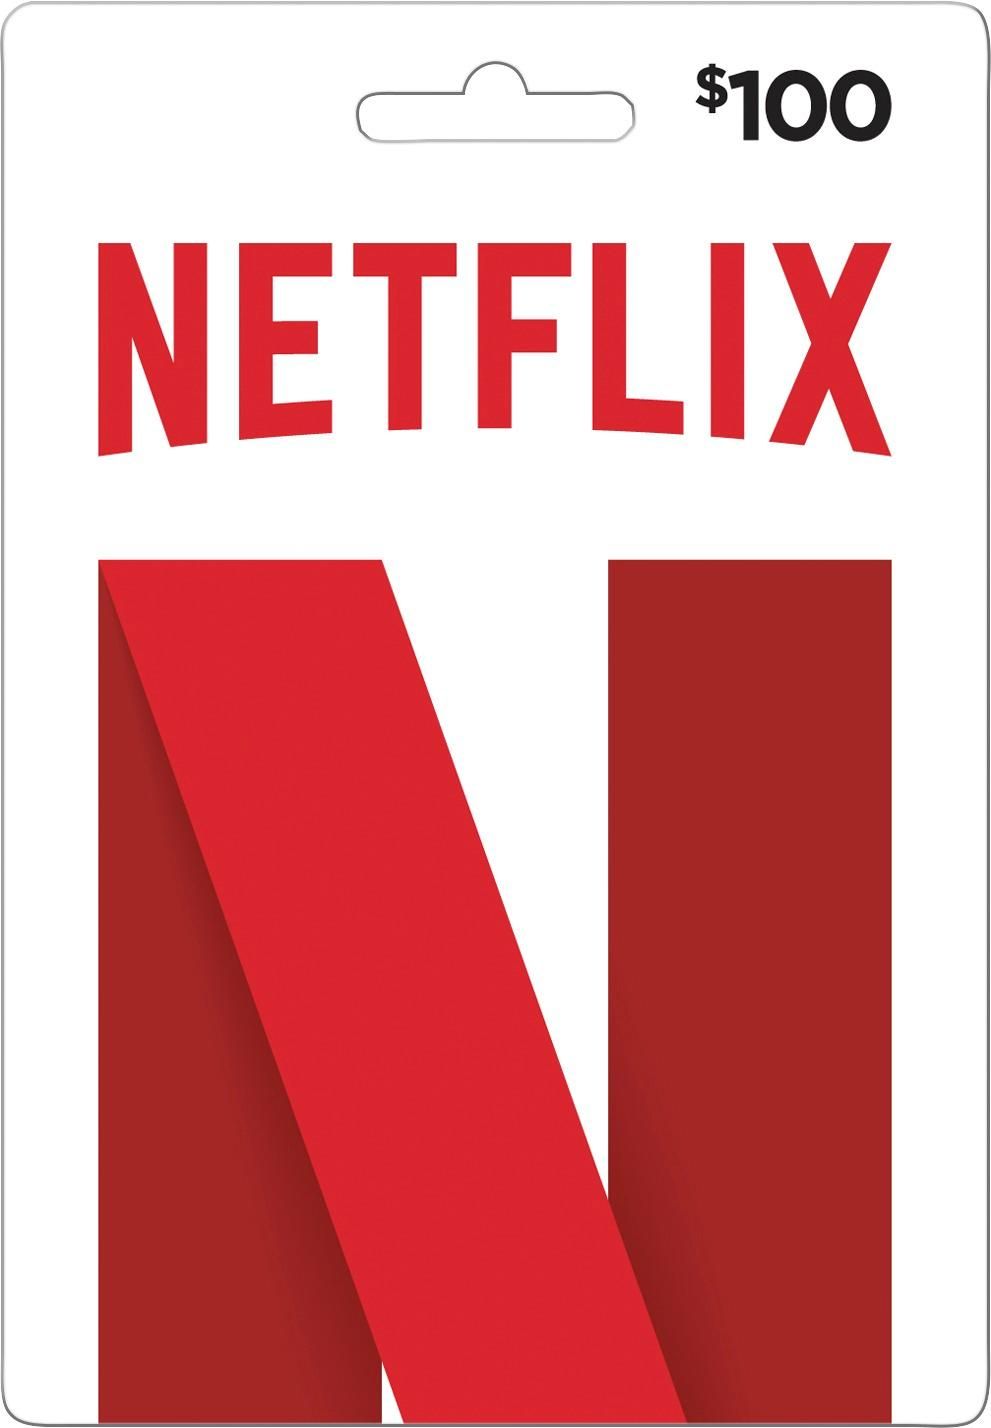 Netflix $100 Gift Card NETFLIX V2 $100 - Best Buy | Best Buy U.S.